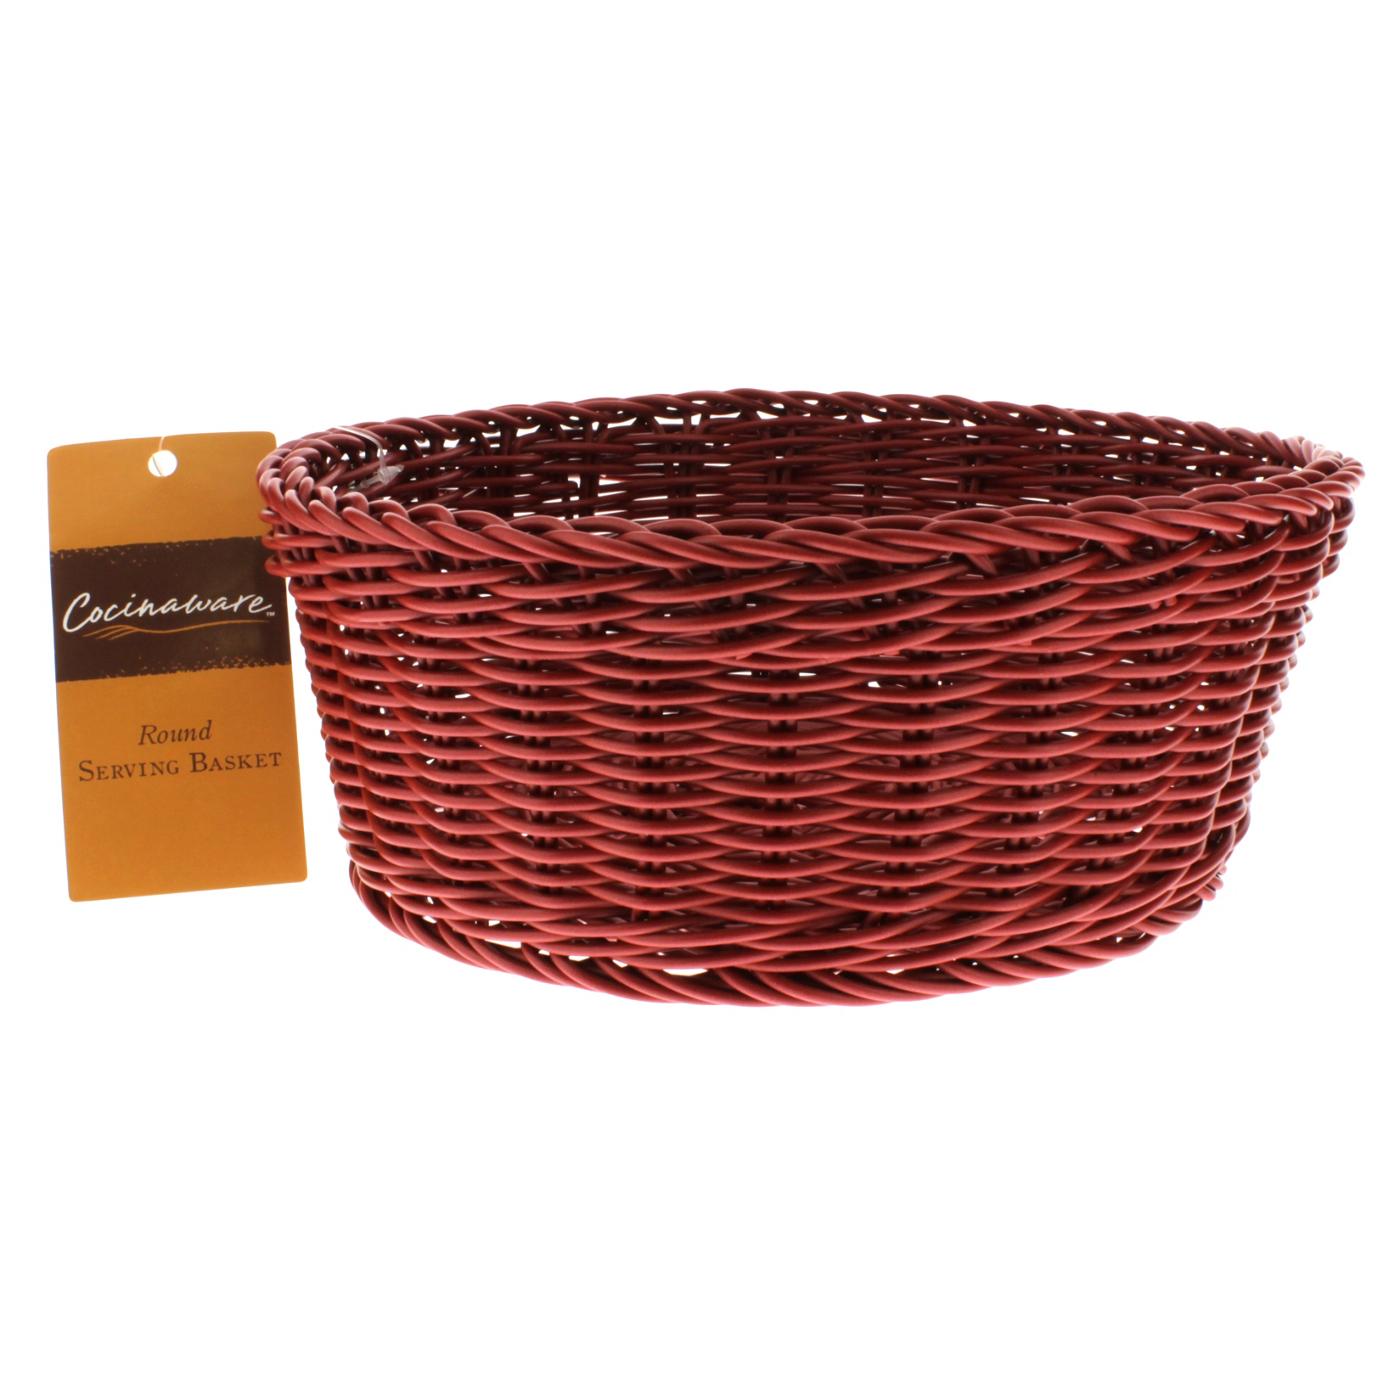 Cocinaware Round Serving Basket; image 3 of 3